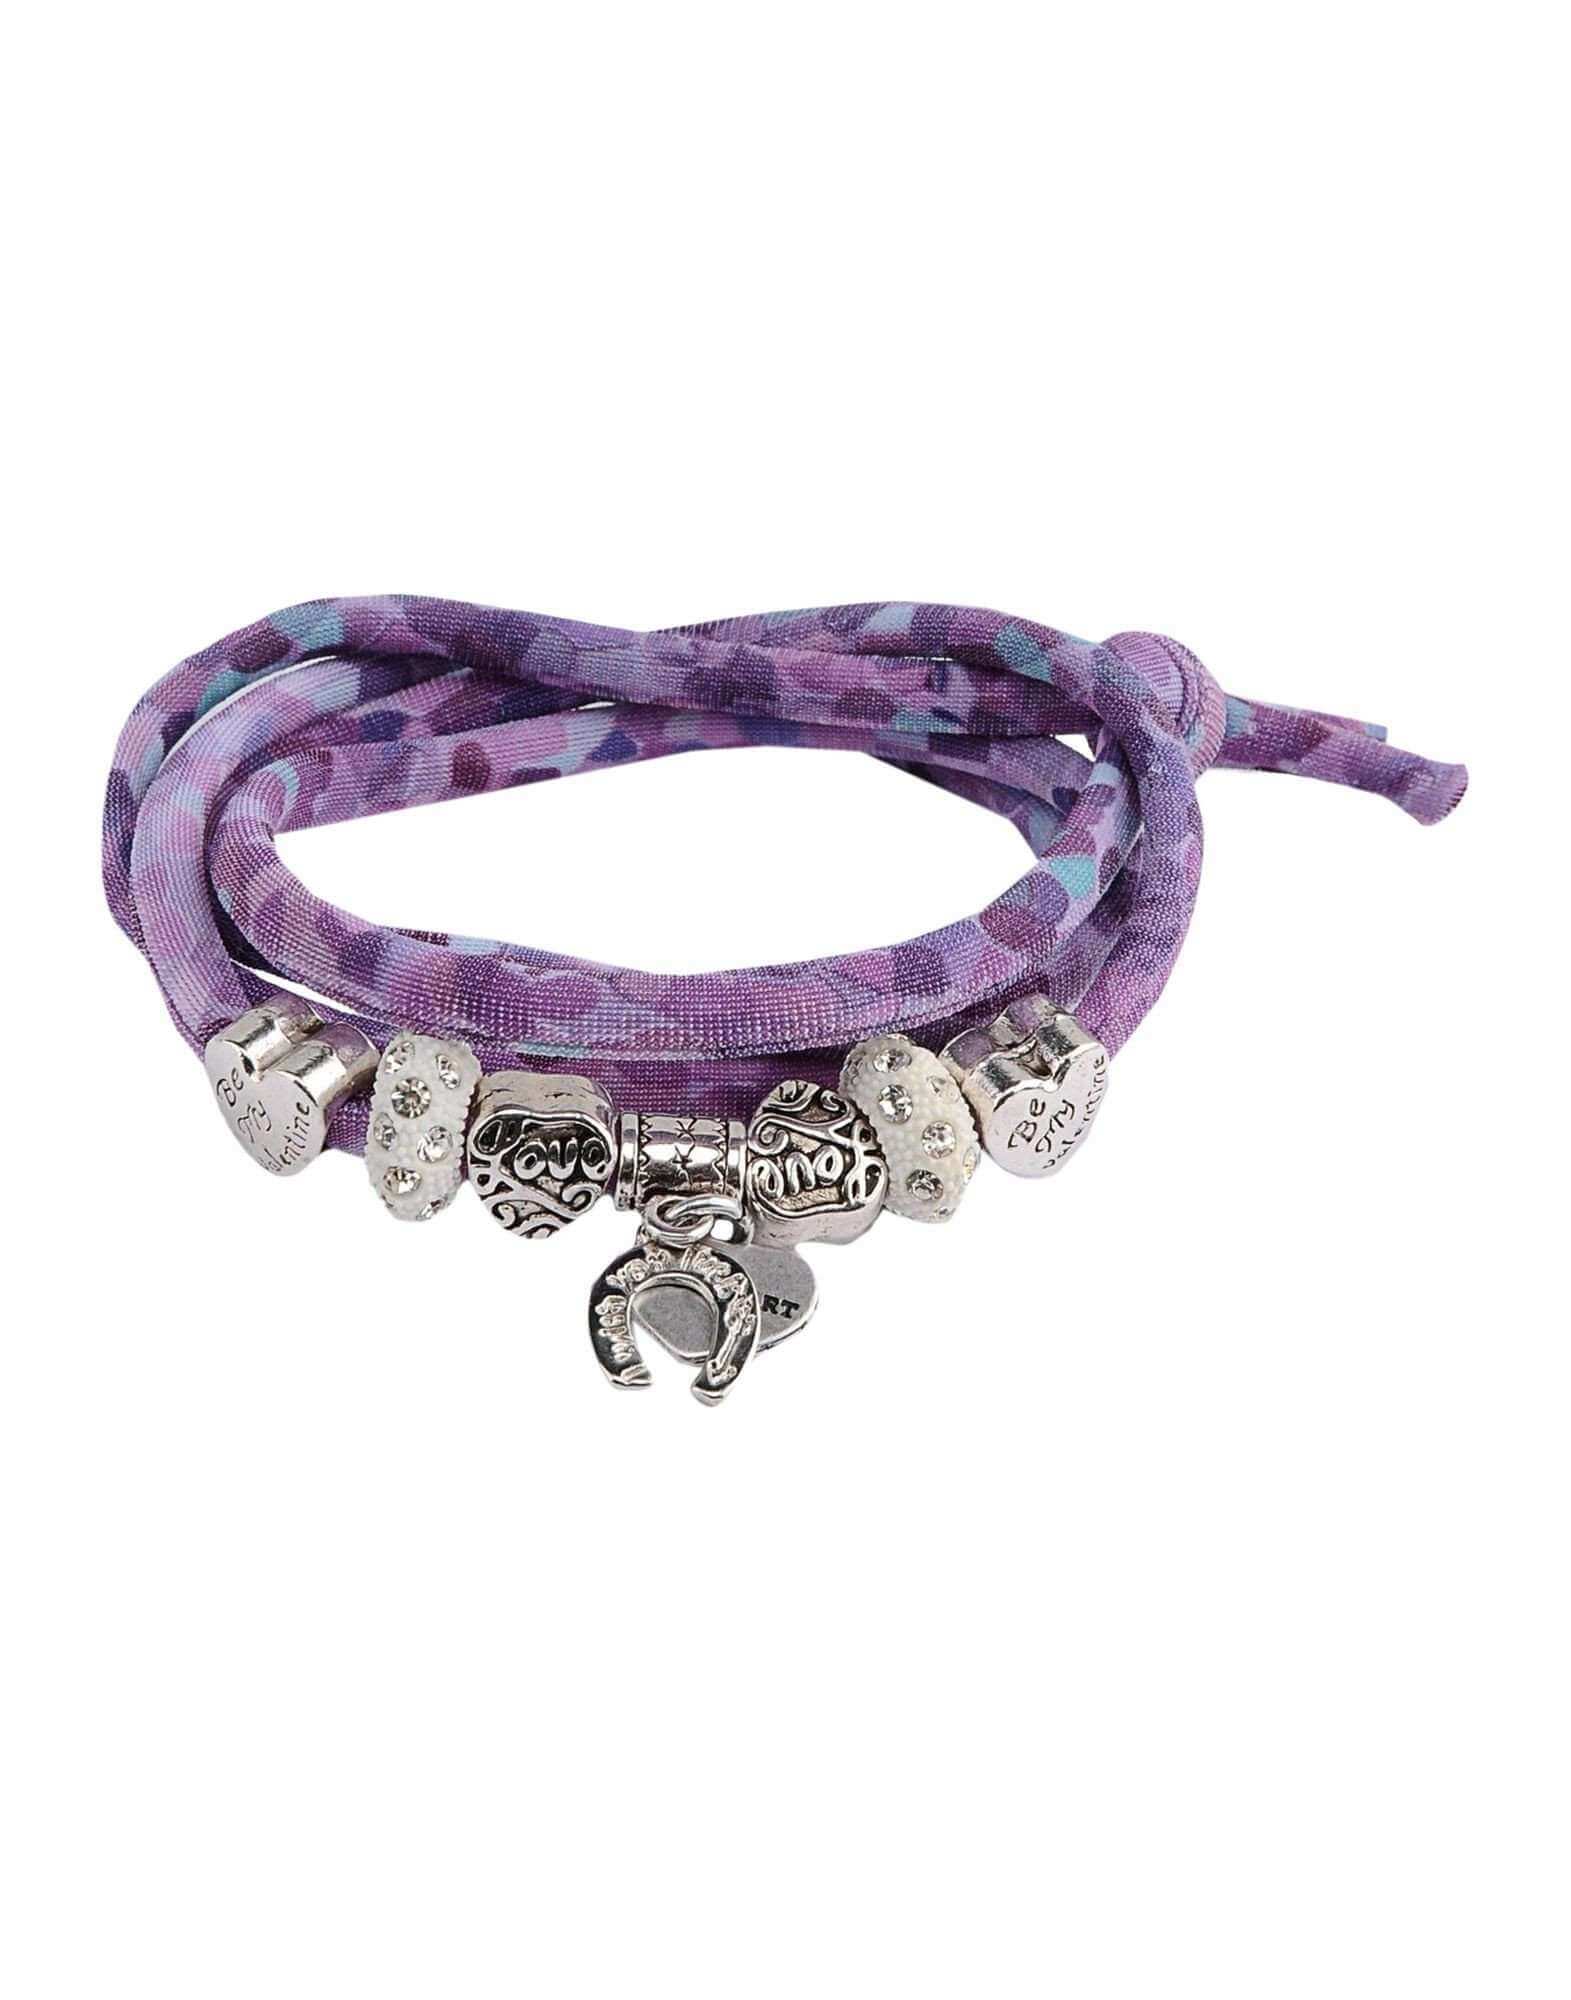 Camo Lilac Friendship Bracelets with Charms